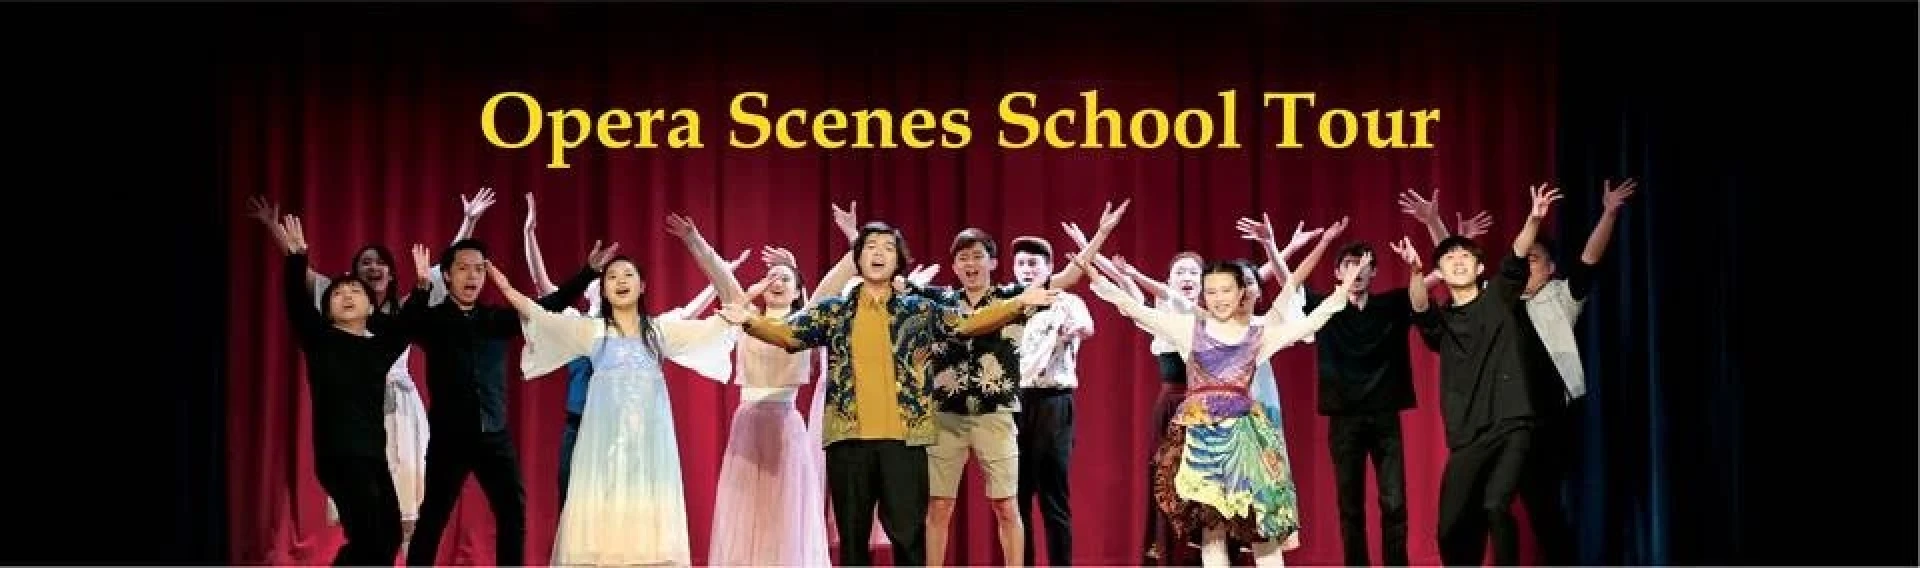 Opera Scenes School Tour